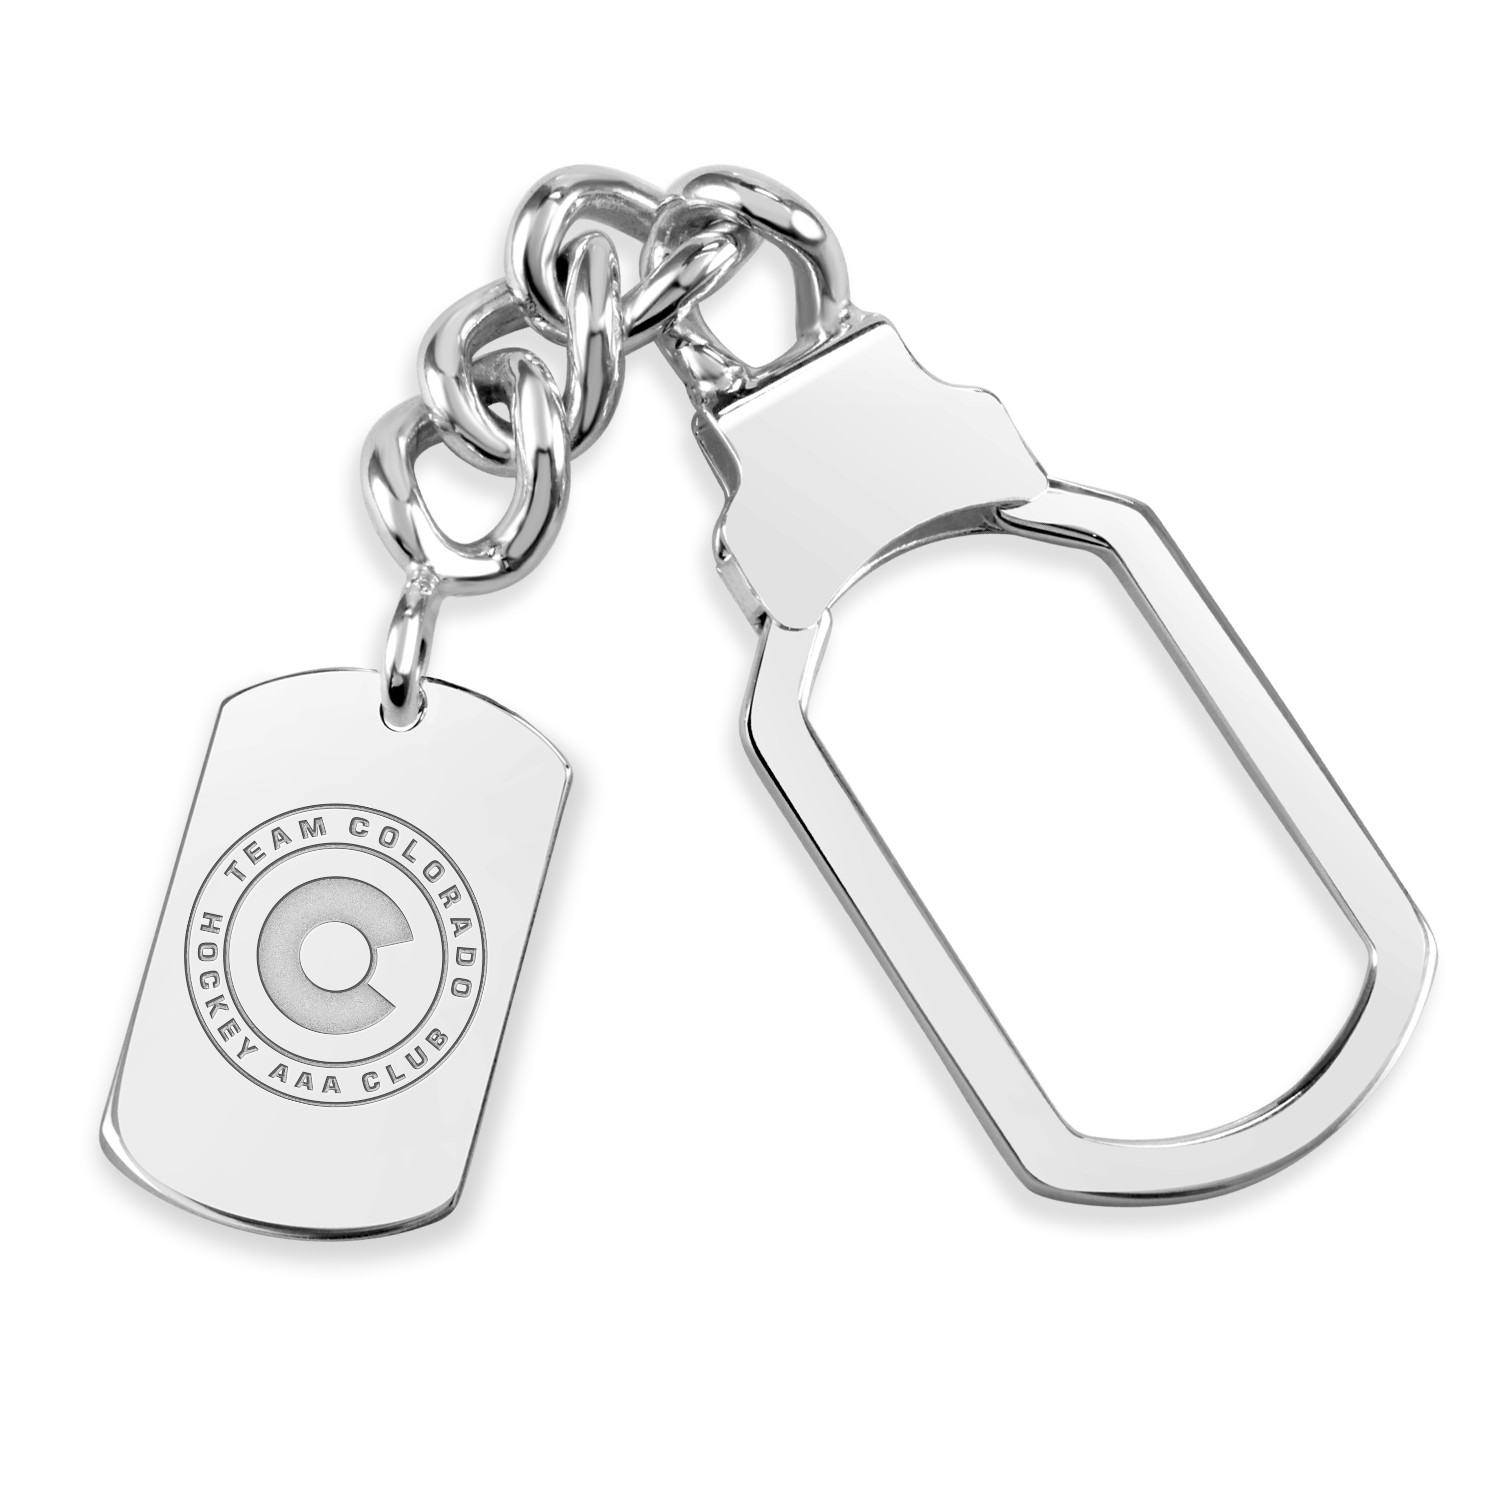 Team Colorado Tension Lock Key Chain Tag